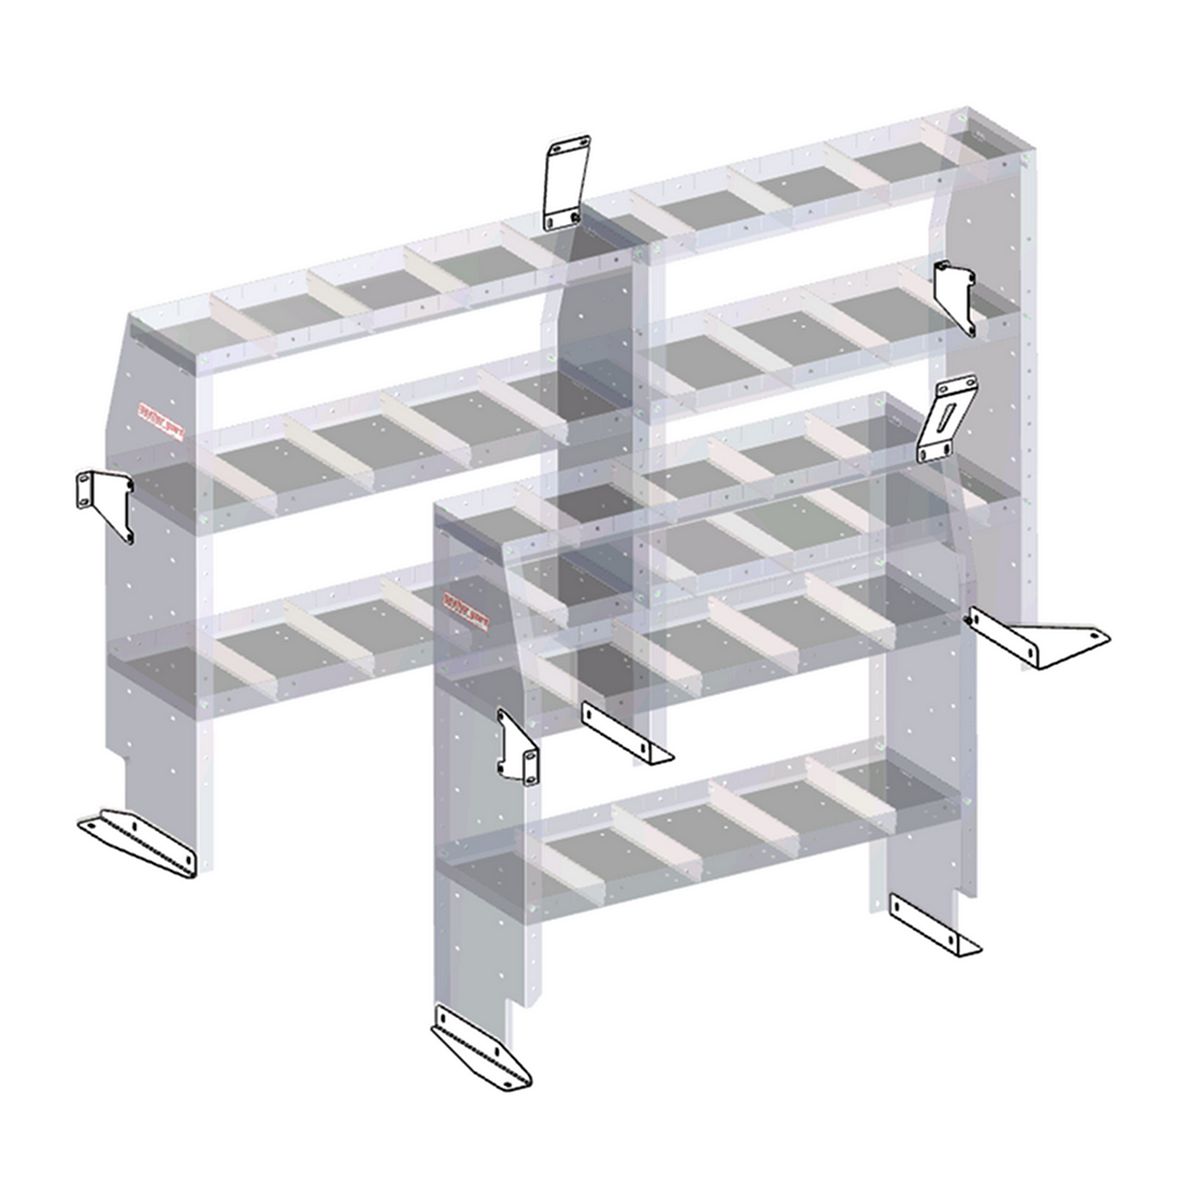 Shelf Unit Mounting Bracket - Mercedes Metris Image